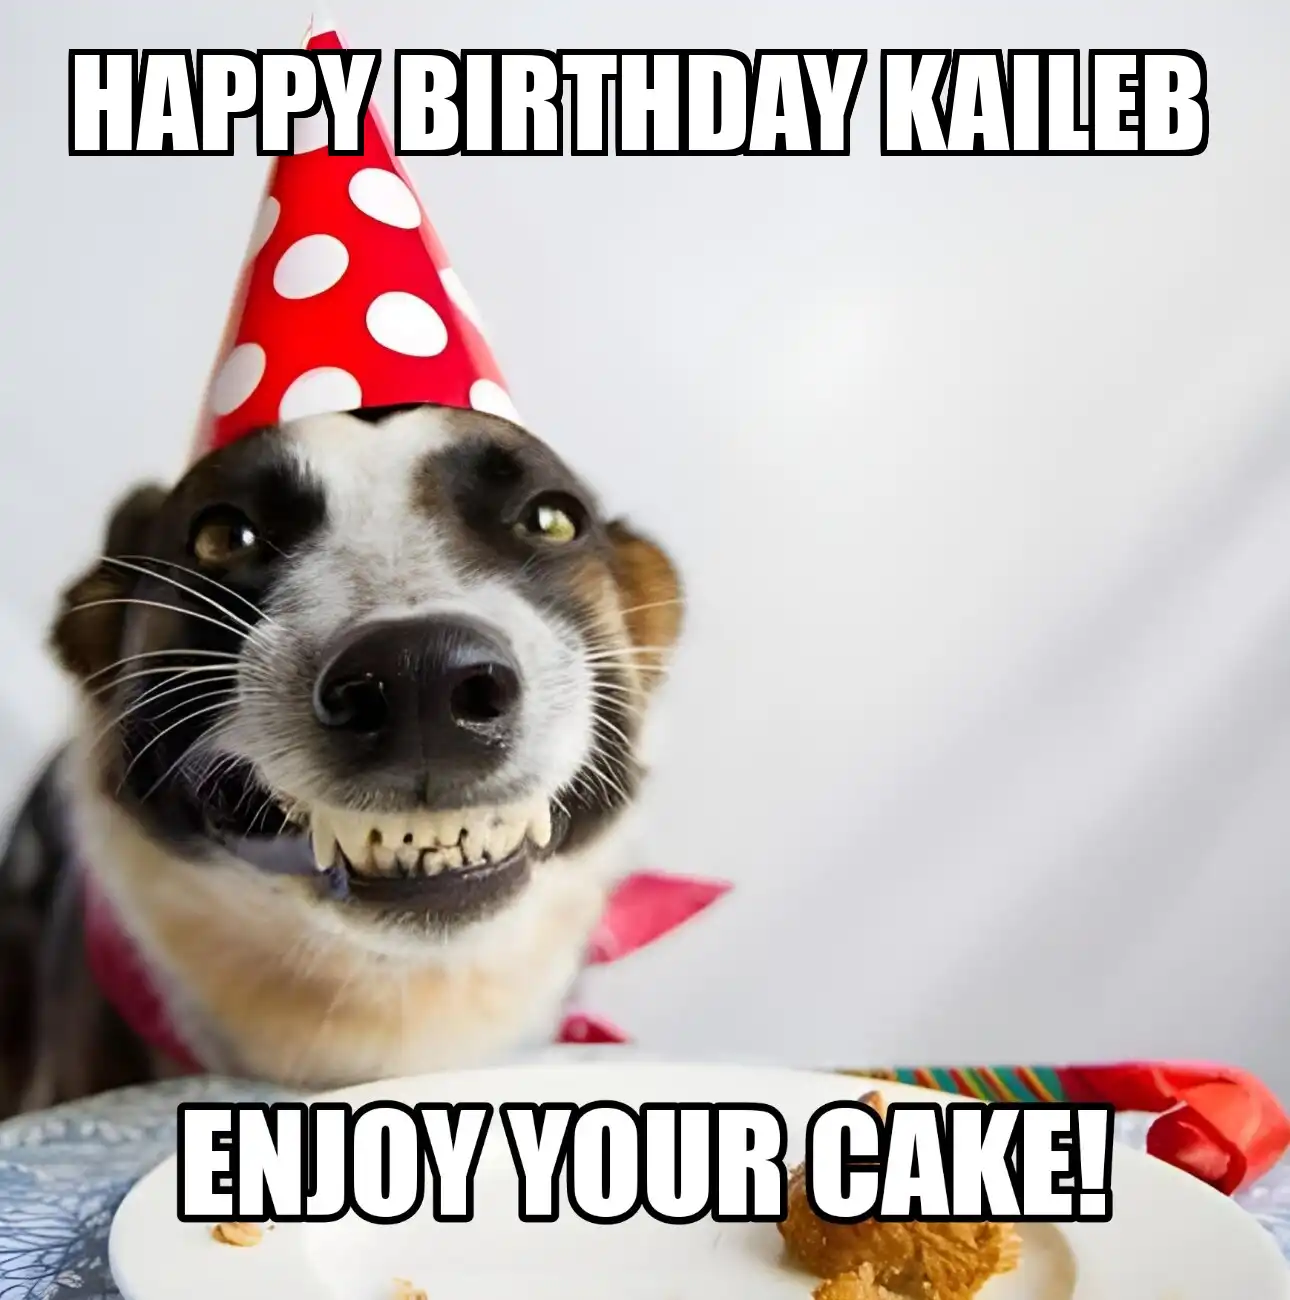 Happy Birthday Kaileb Enjoy Your Cake Dog Meme